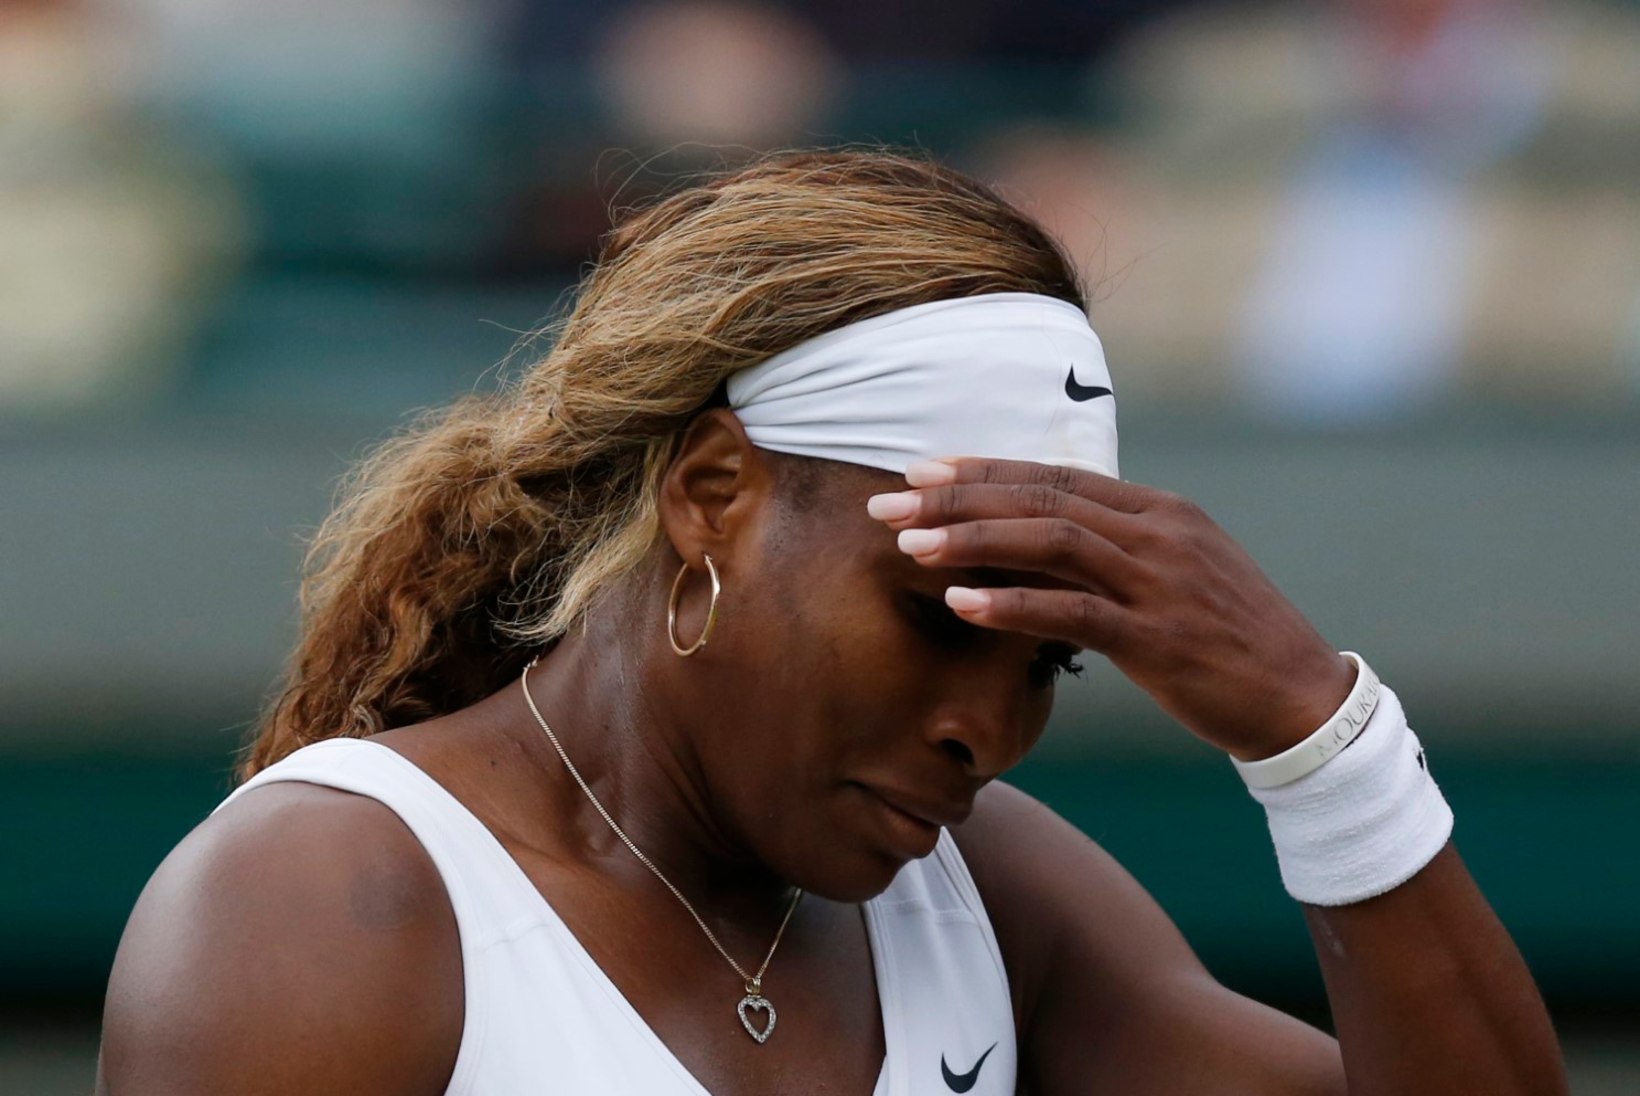 FOTOD: Serena Williams pidi Wimbledonis reketid pakkima